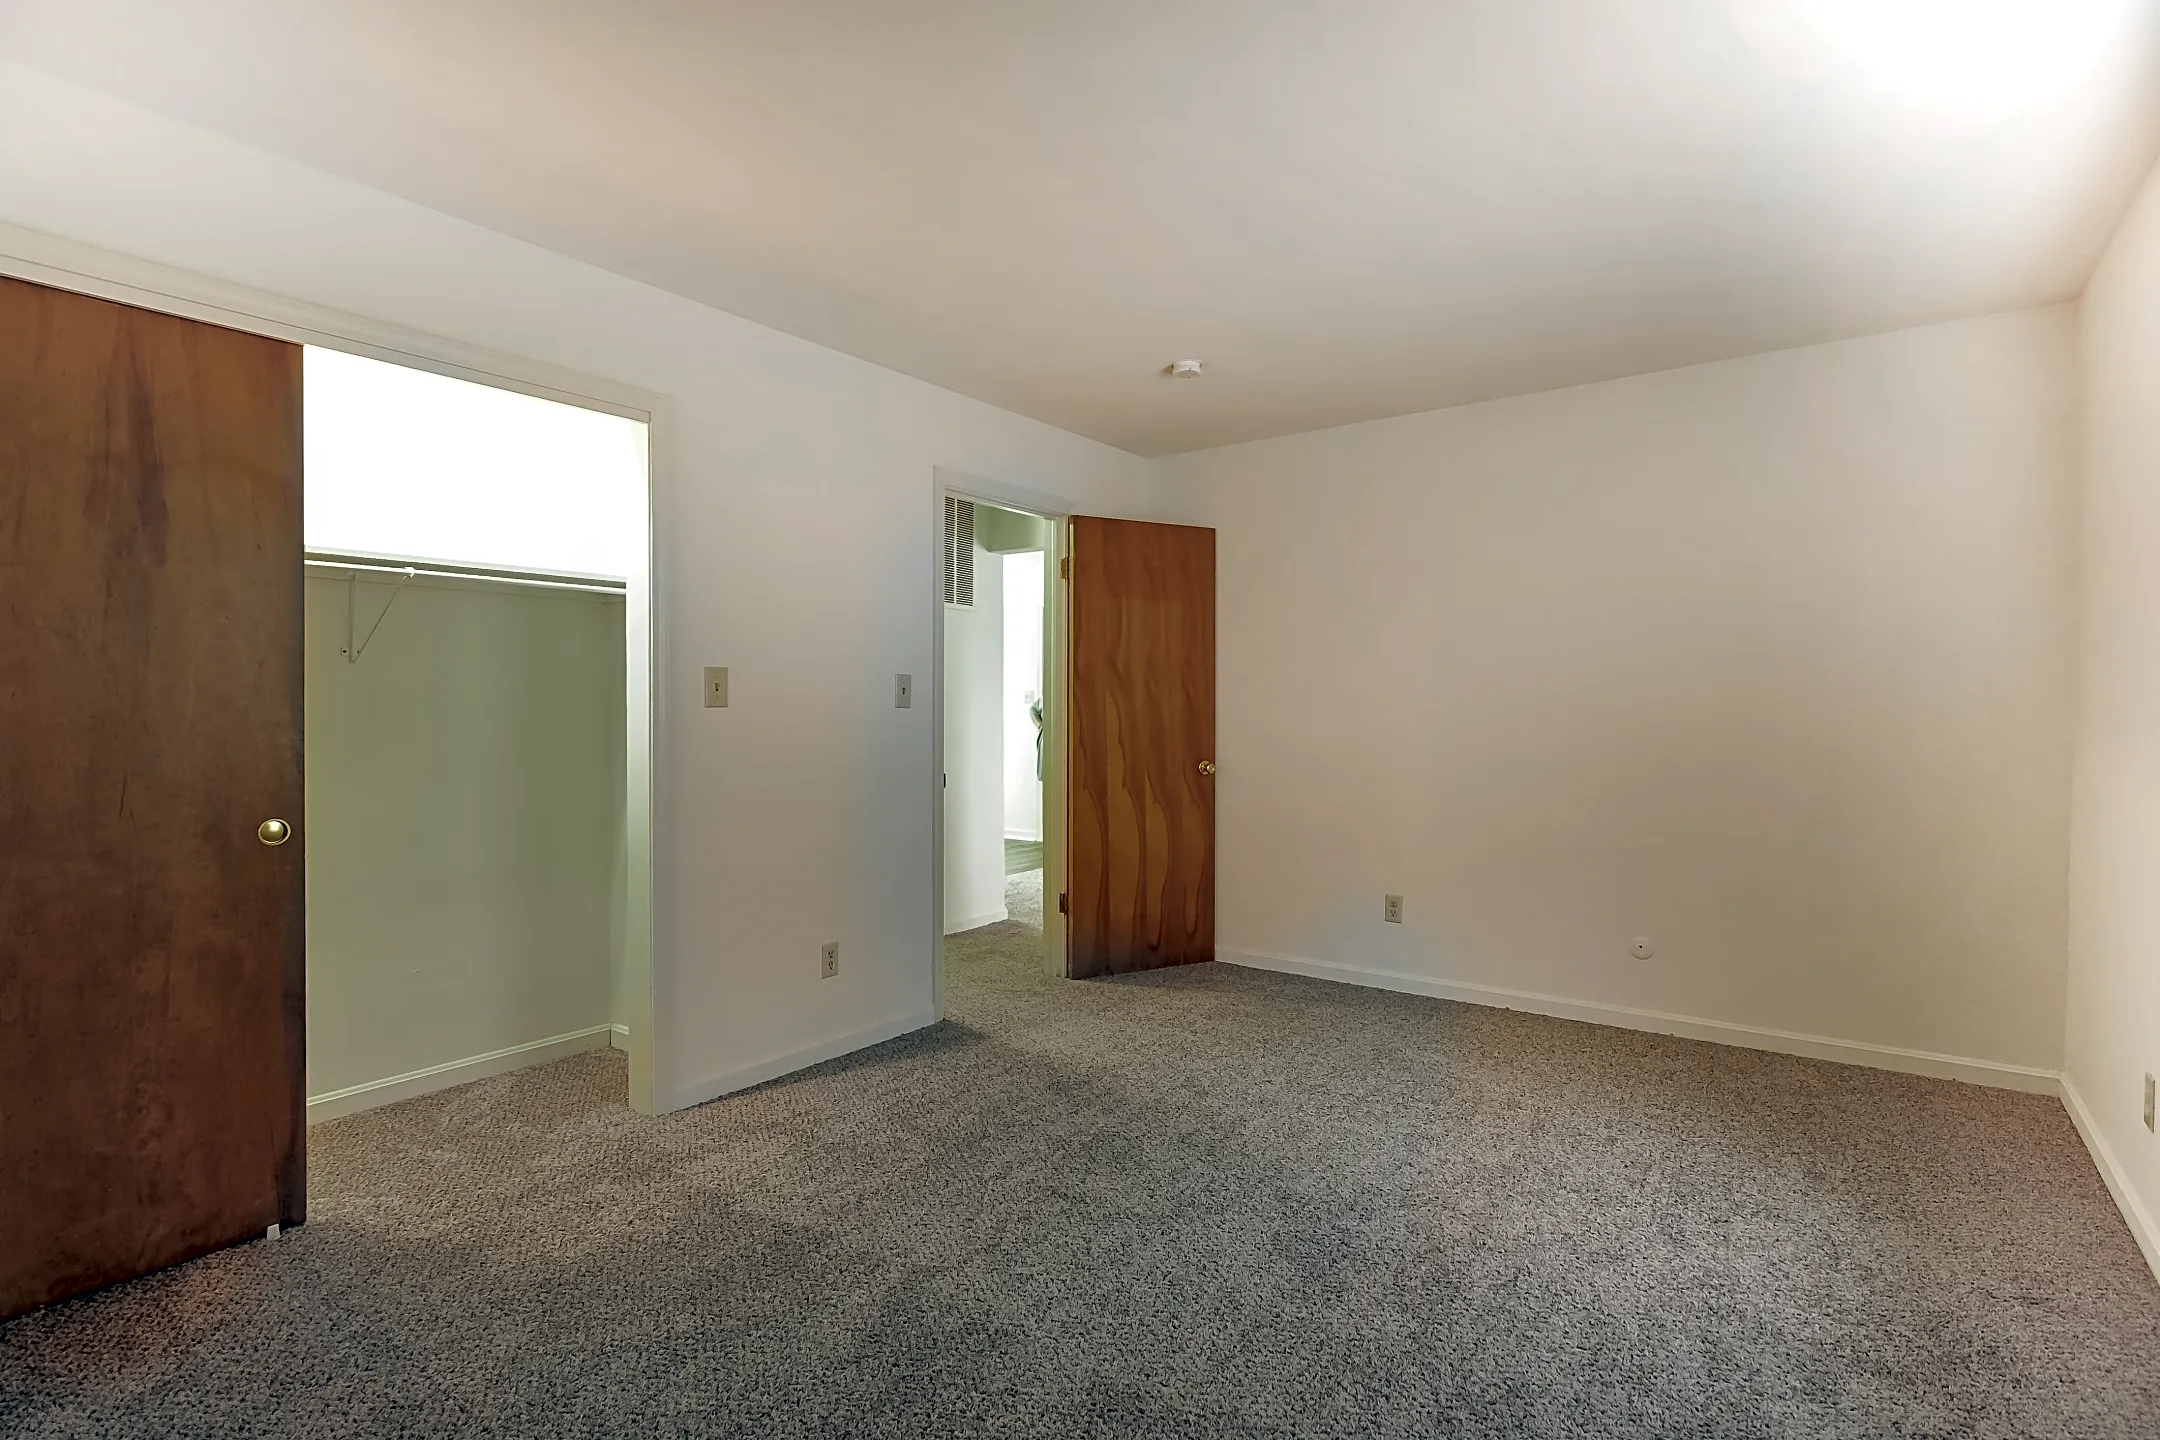 Living Room - Apartment Village - Evansville, IN